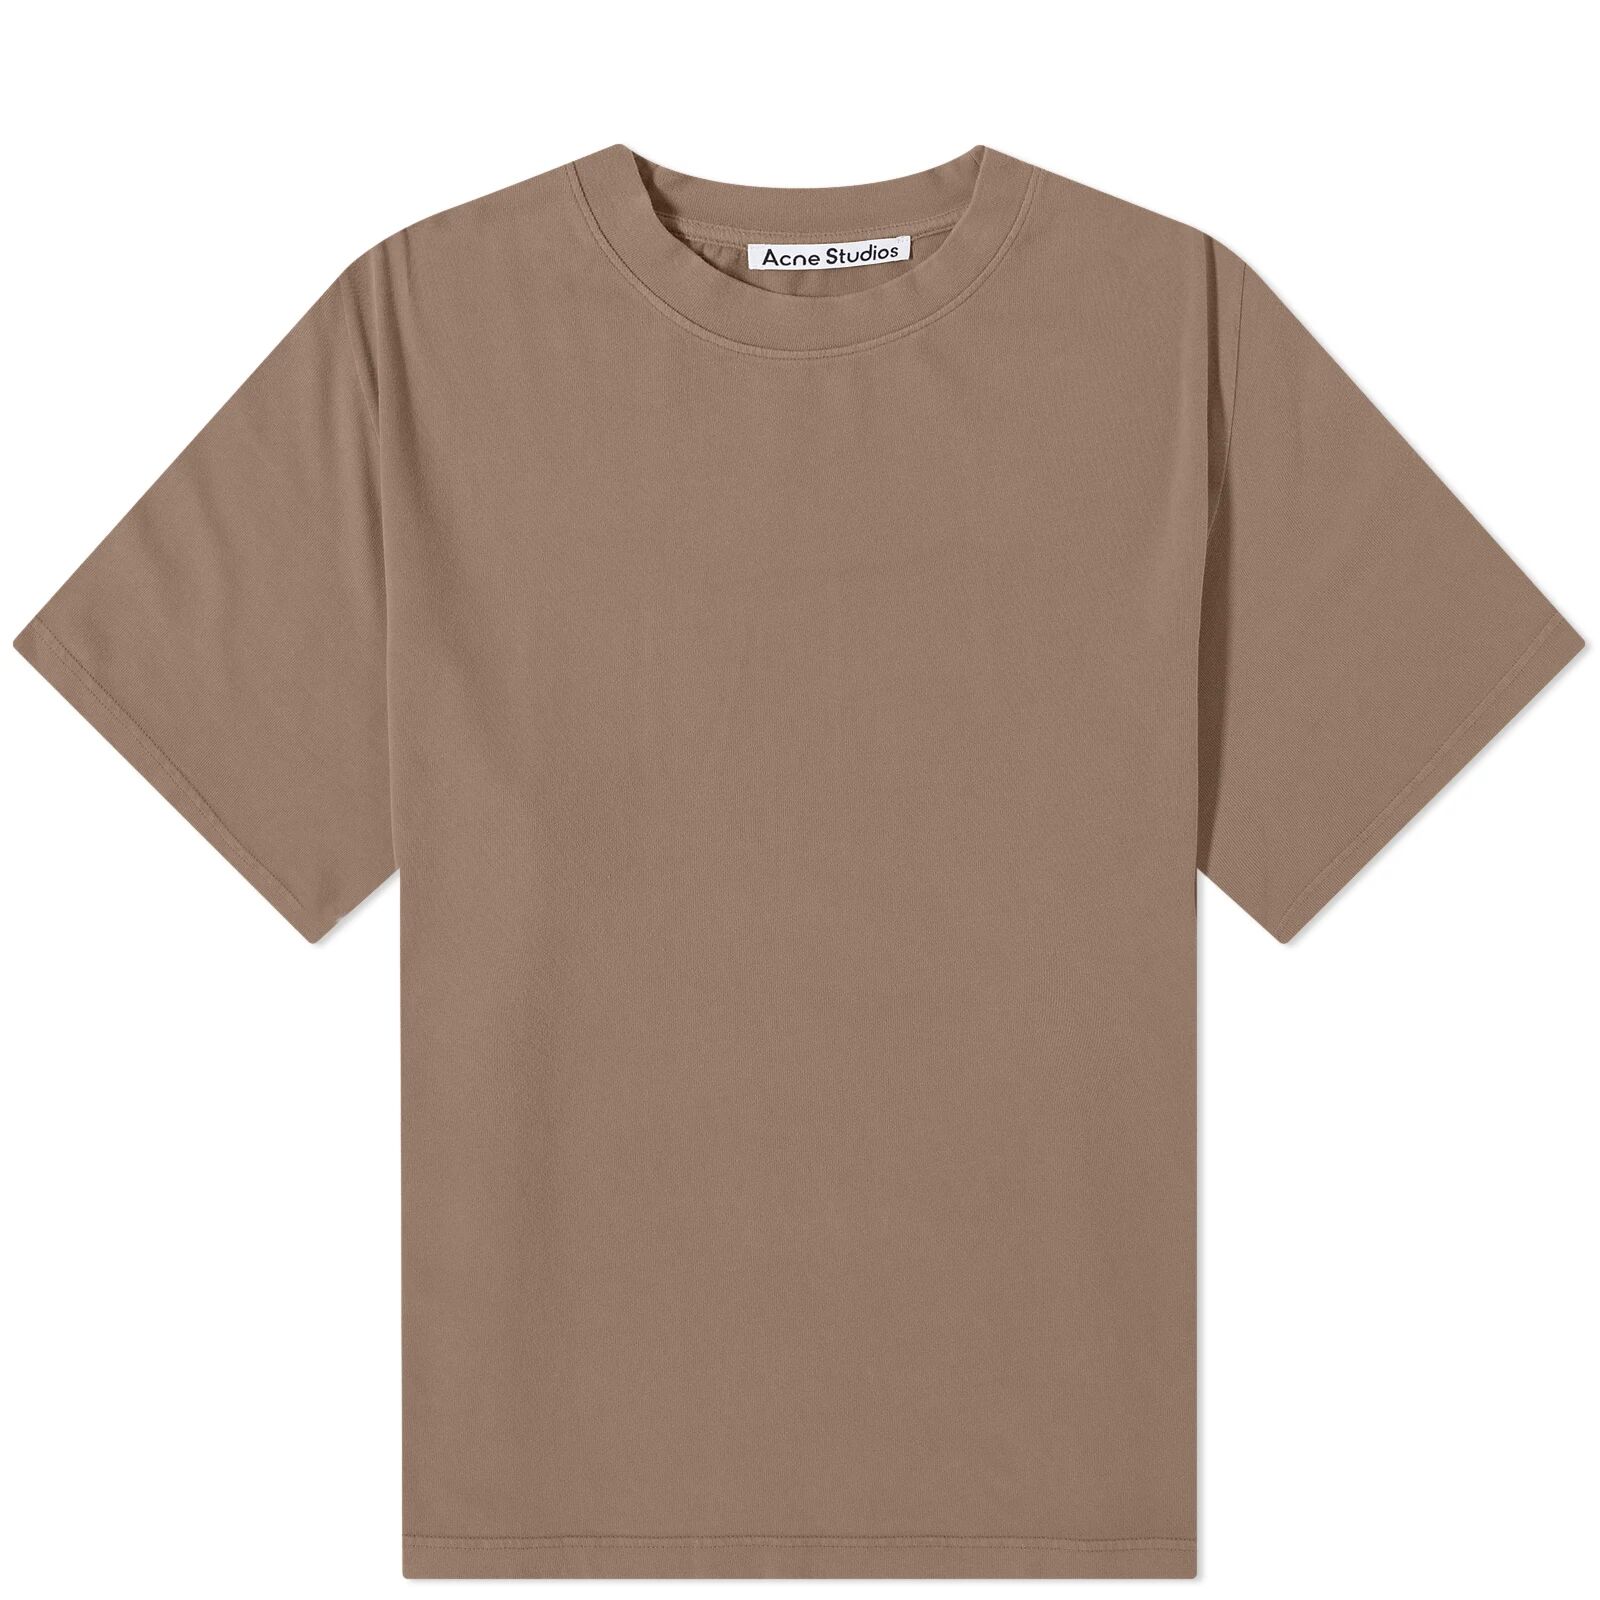 Acne Studios Men's Extorr Vintage T-Shirt in Dark Brown, Size Medium